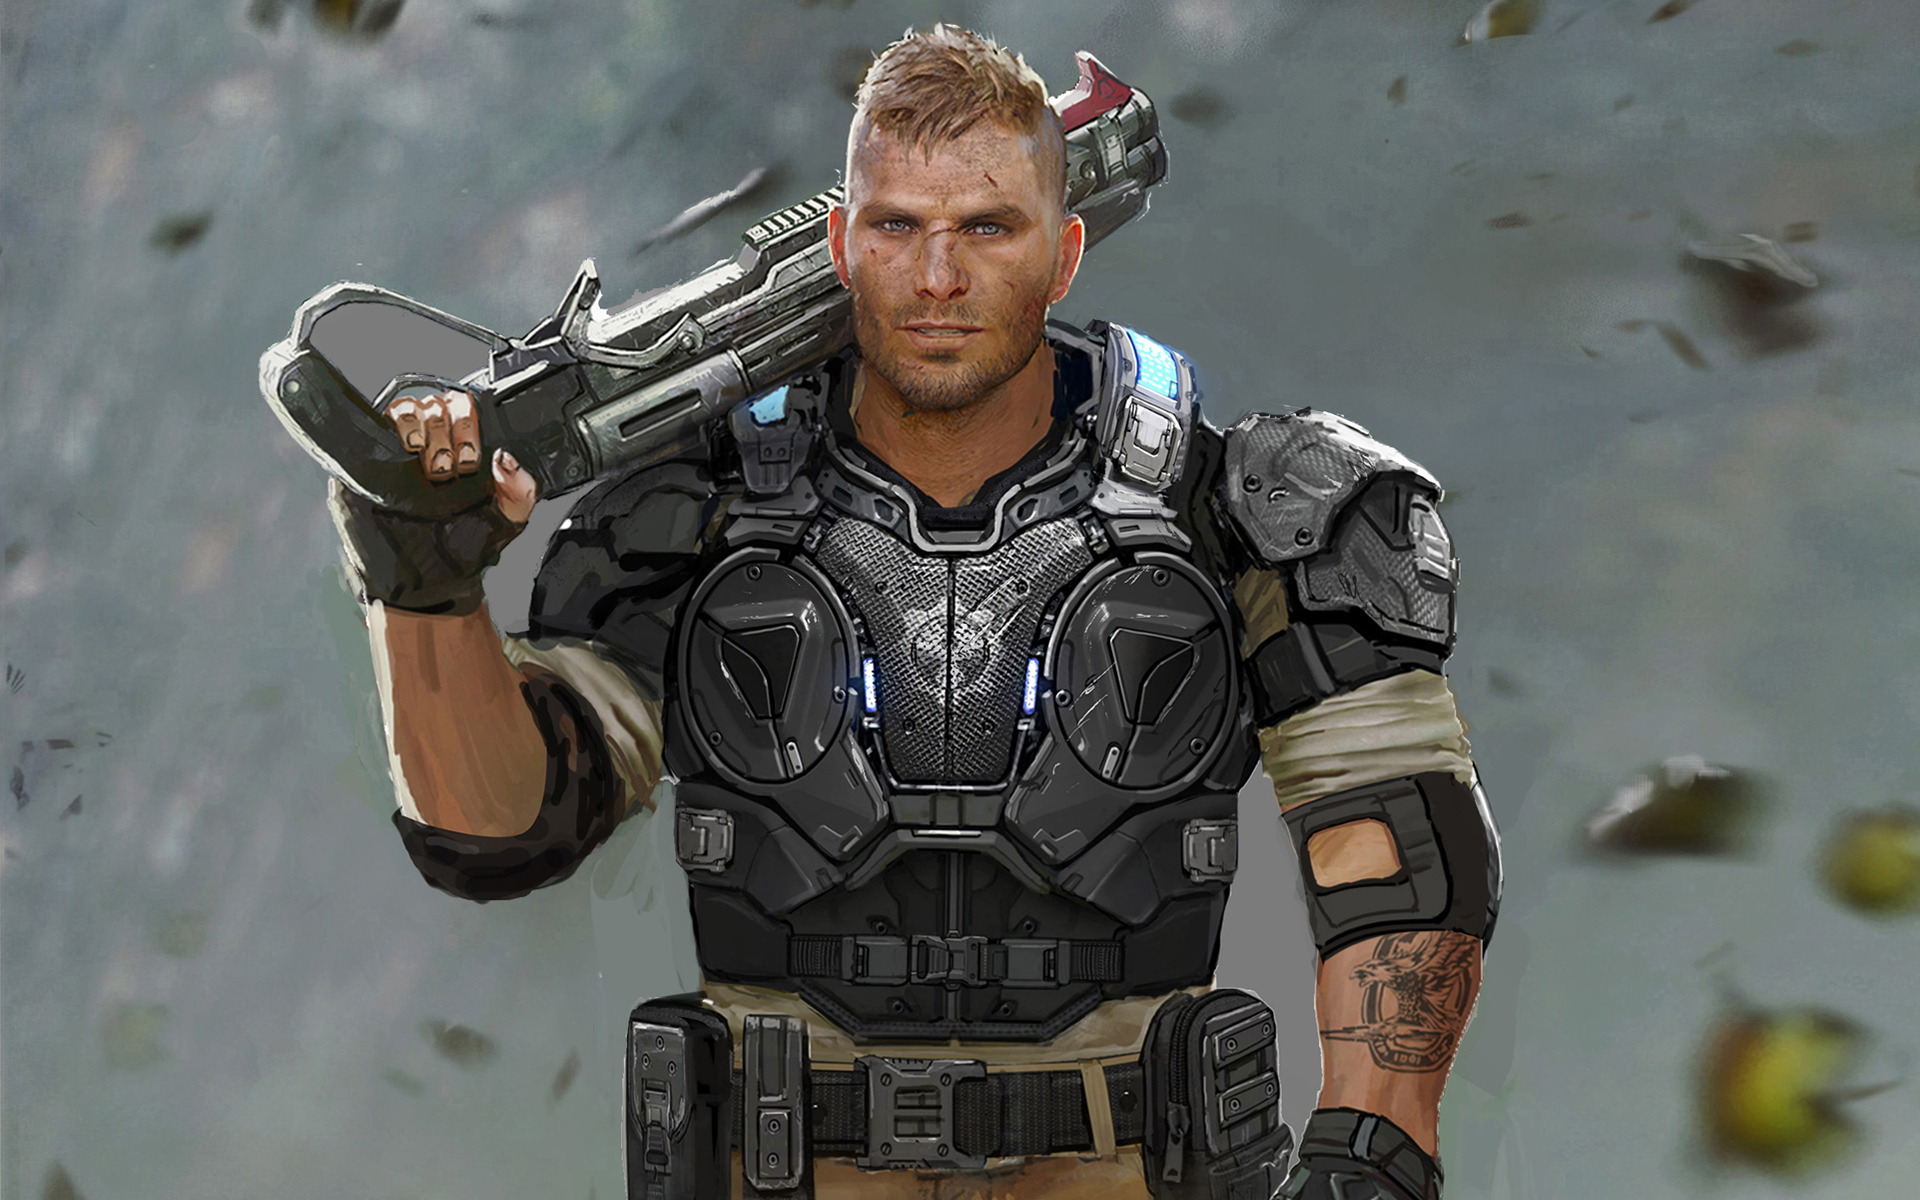 gears of war 4 wallpaper,fictional character,superhero,screenshot,action figure,arm